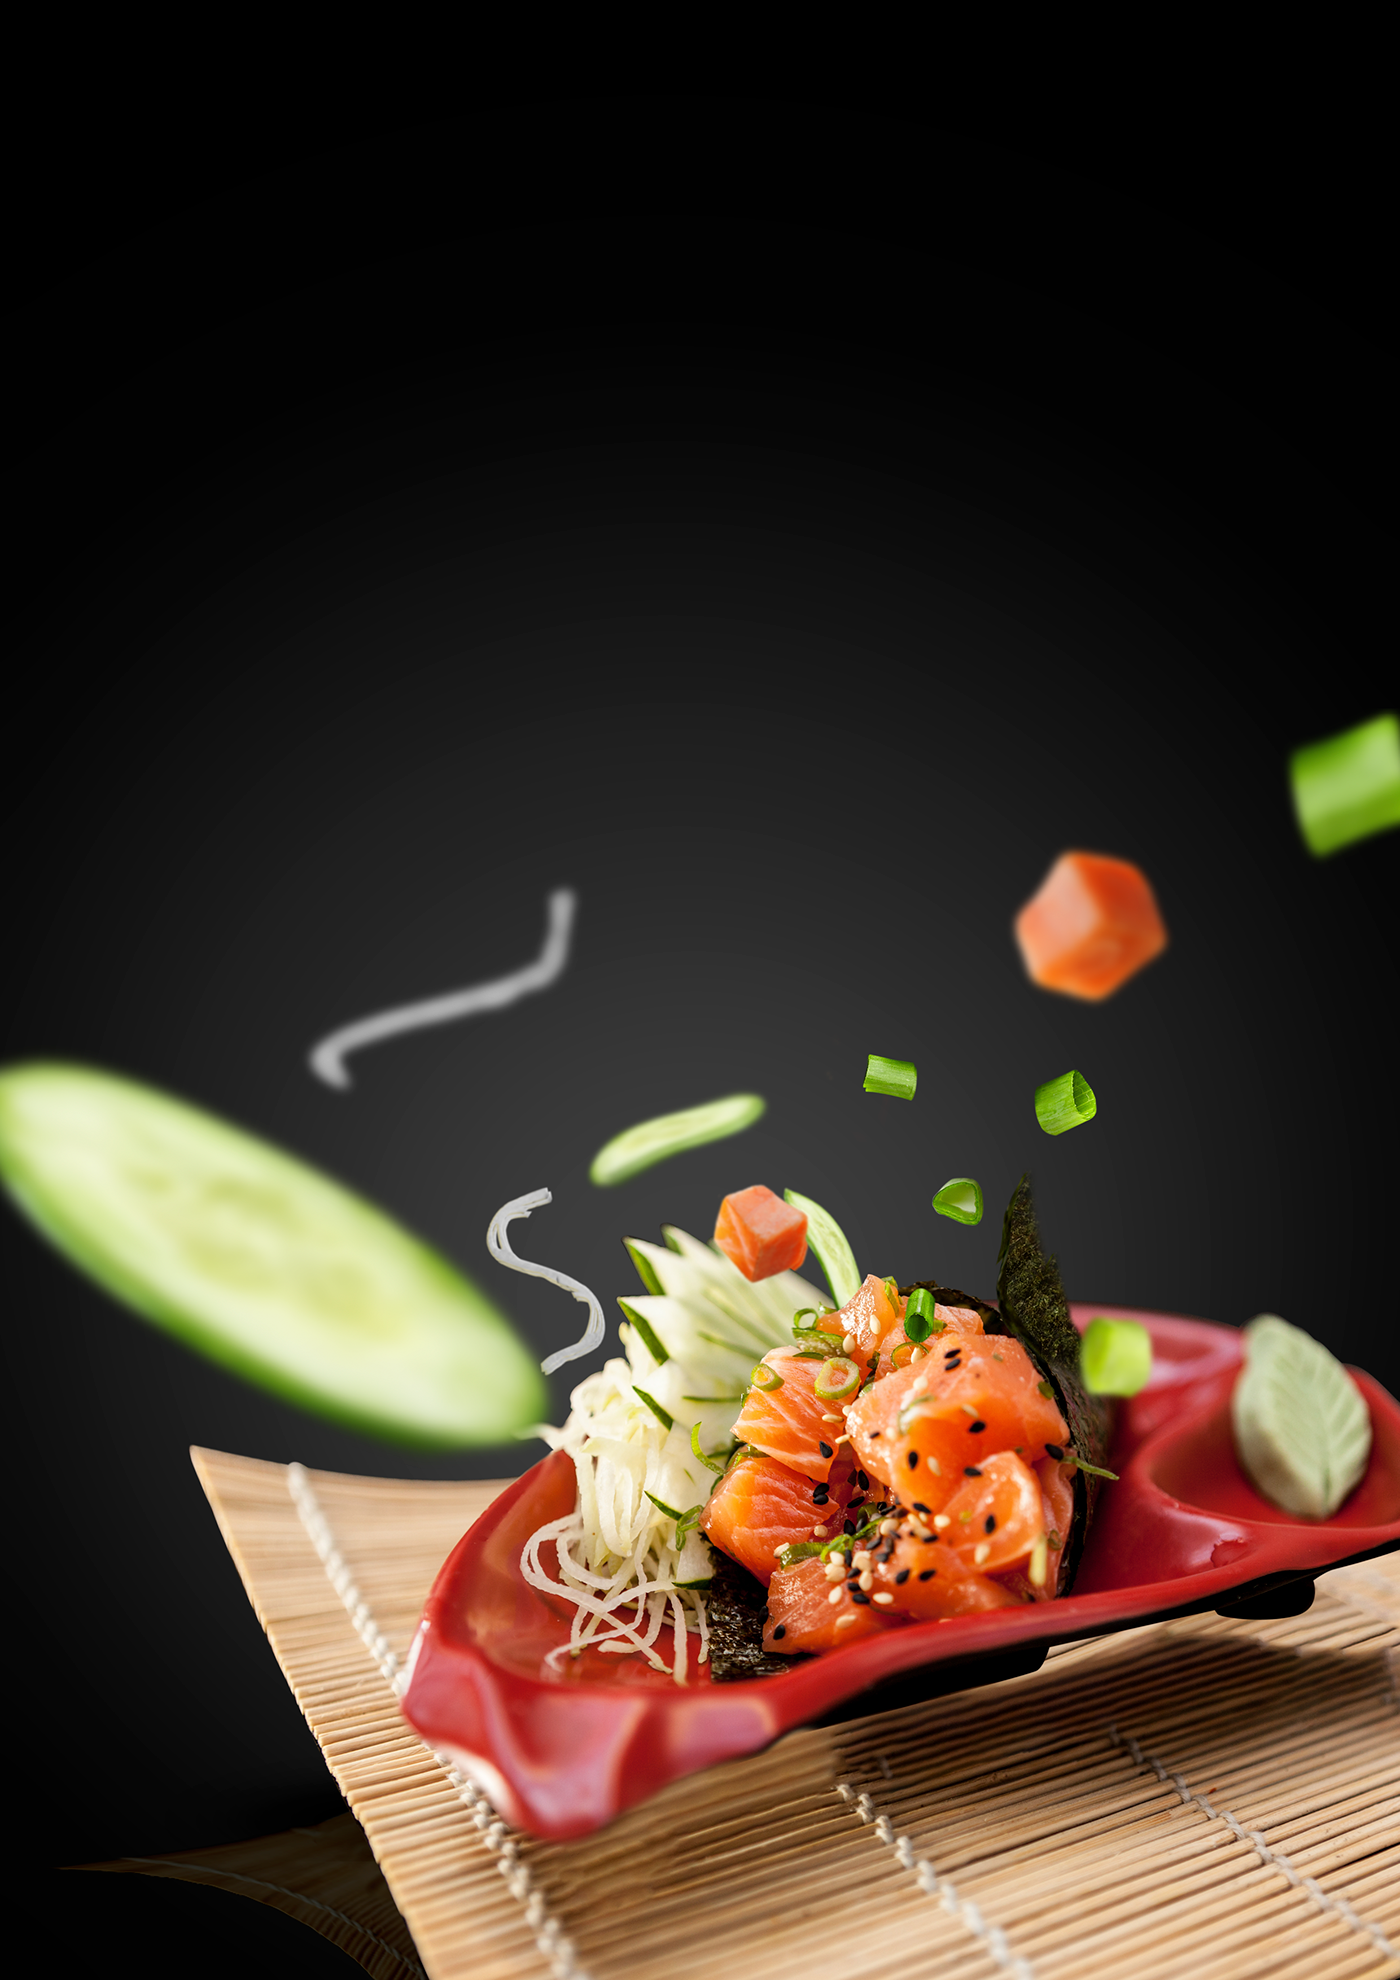 surreal photo editing surreal photoshop edit oriental food Sushi high quality